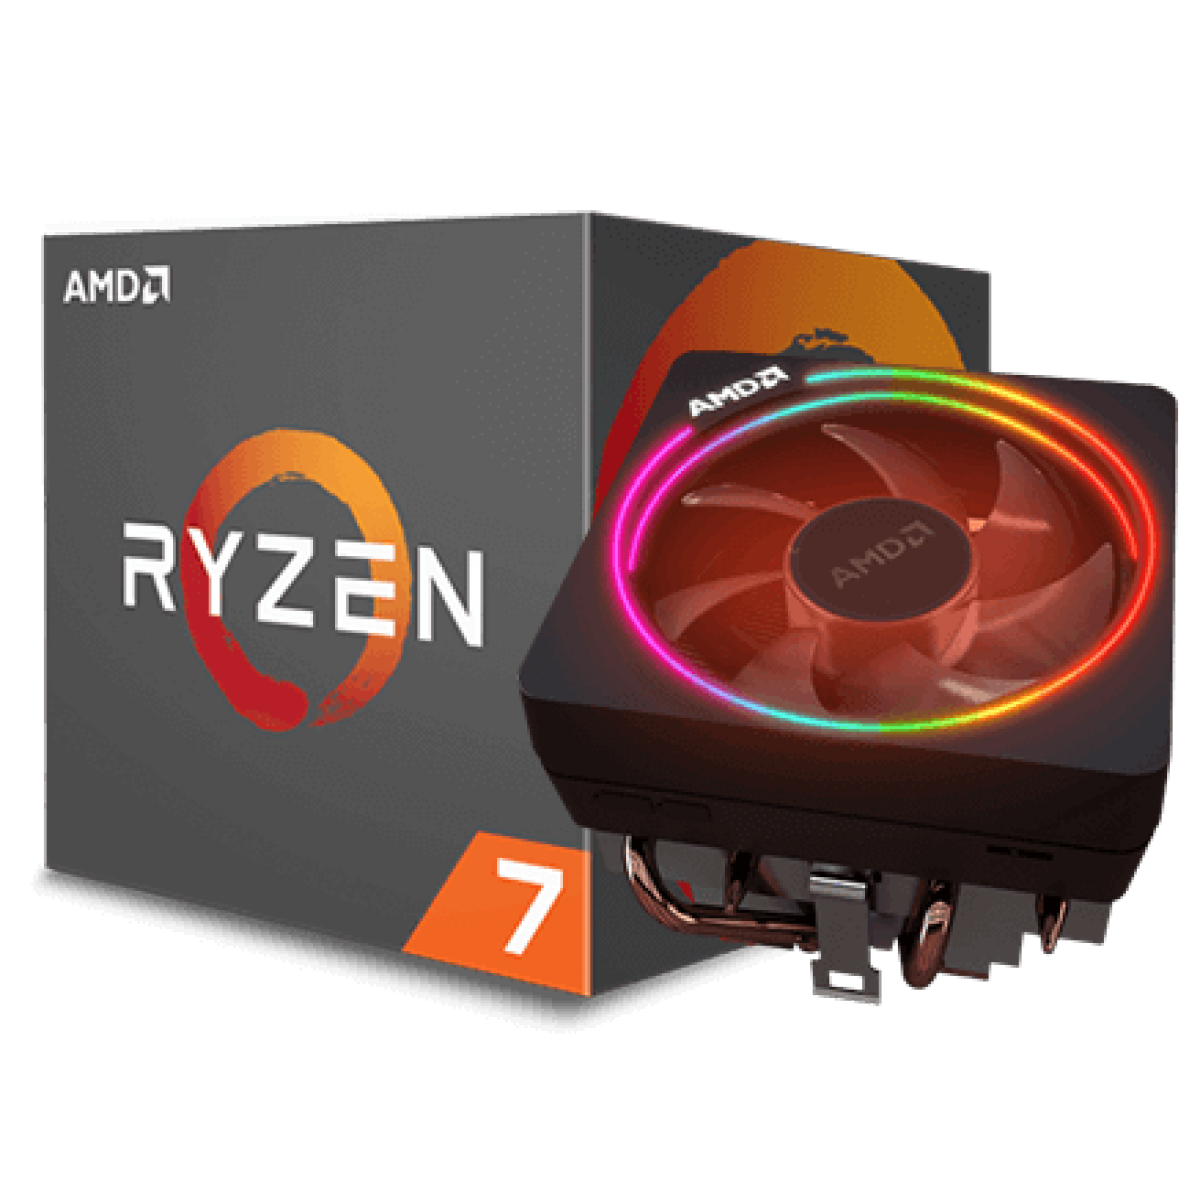 Ryzen 9 кулер. AMD Ryzen 7 2700x (Box). AMD Ryzen 7 5800x Box кулер. AMD 7 2700x кулер. AМD Ryzen 7 2700 8/16.